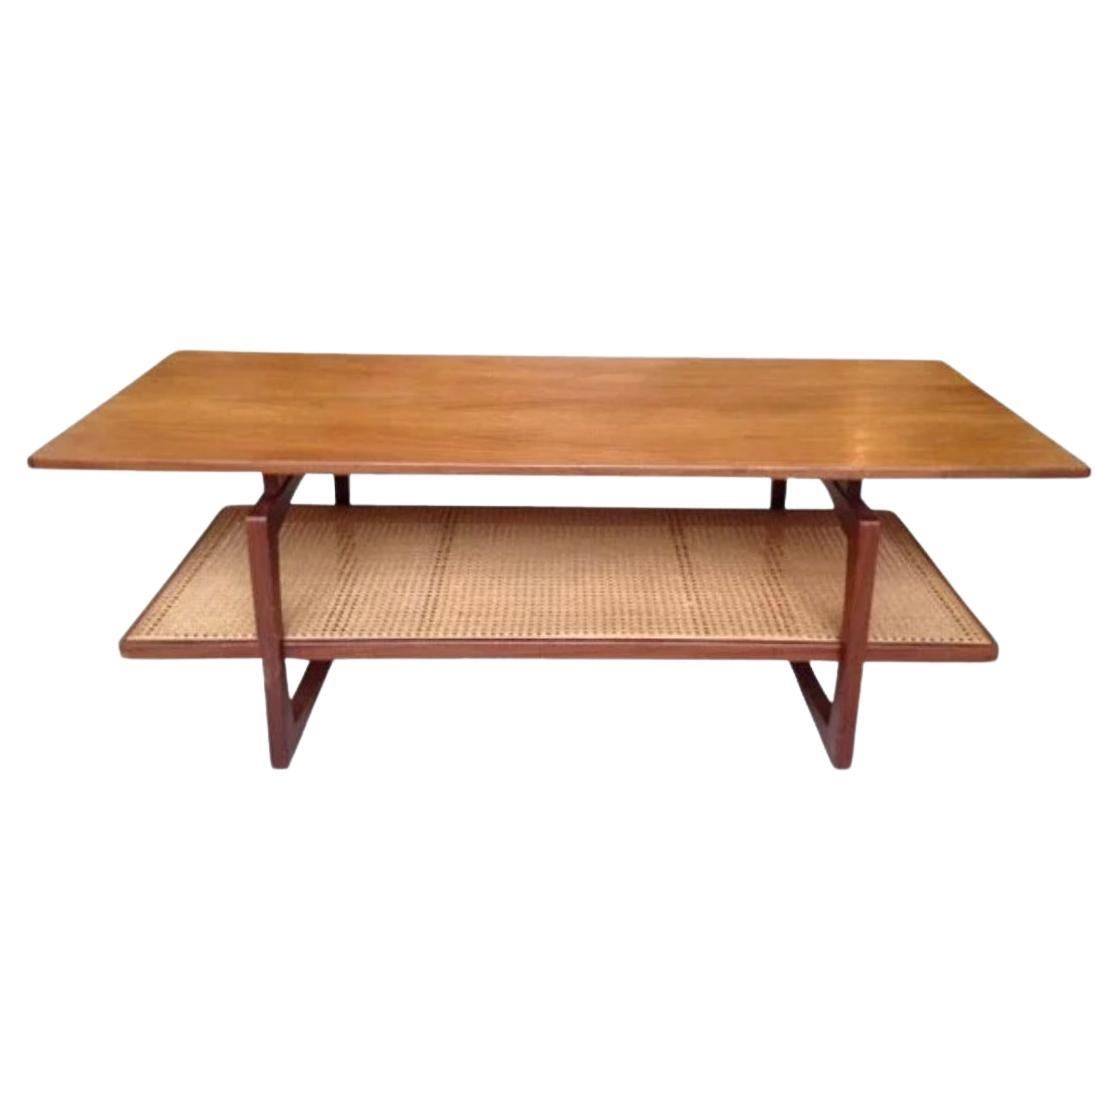 1960’s Gplan coffee table by RA Bird